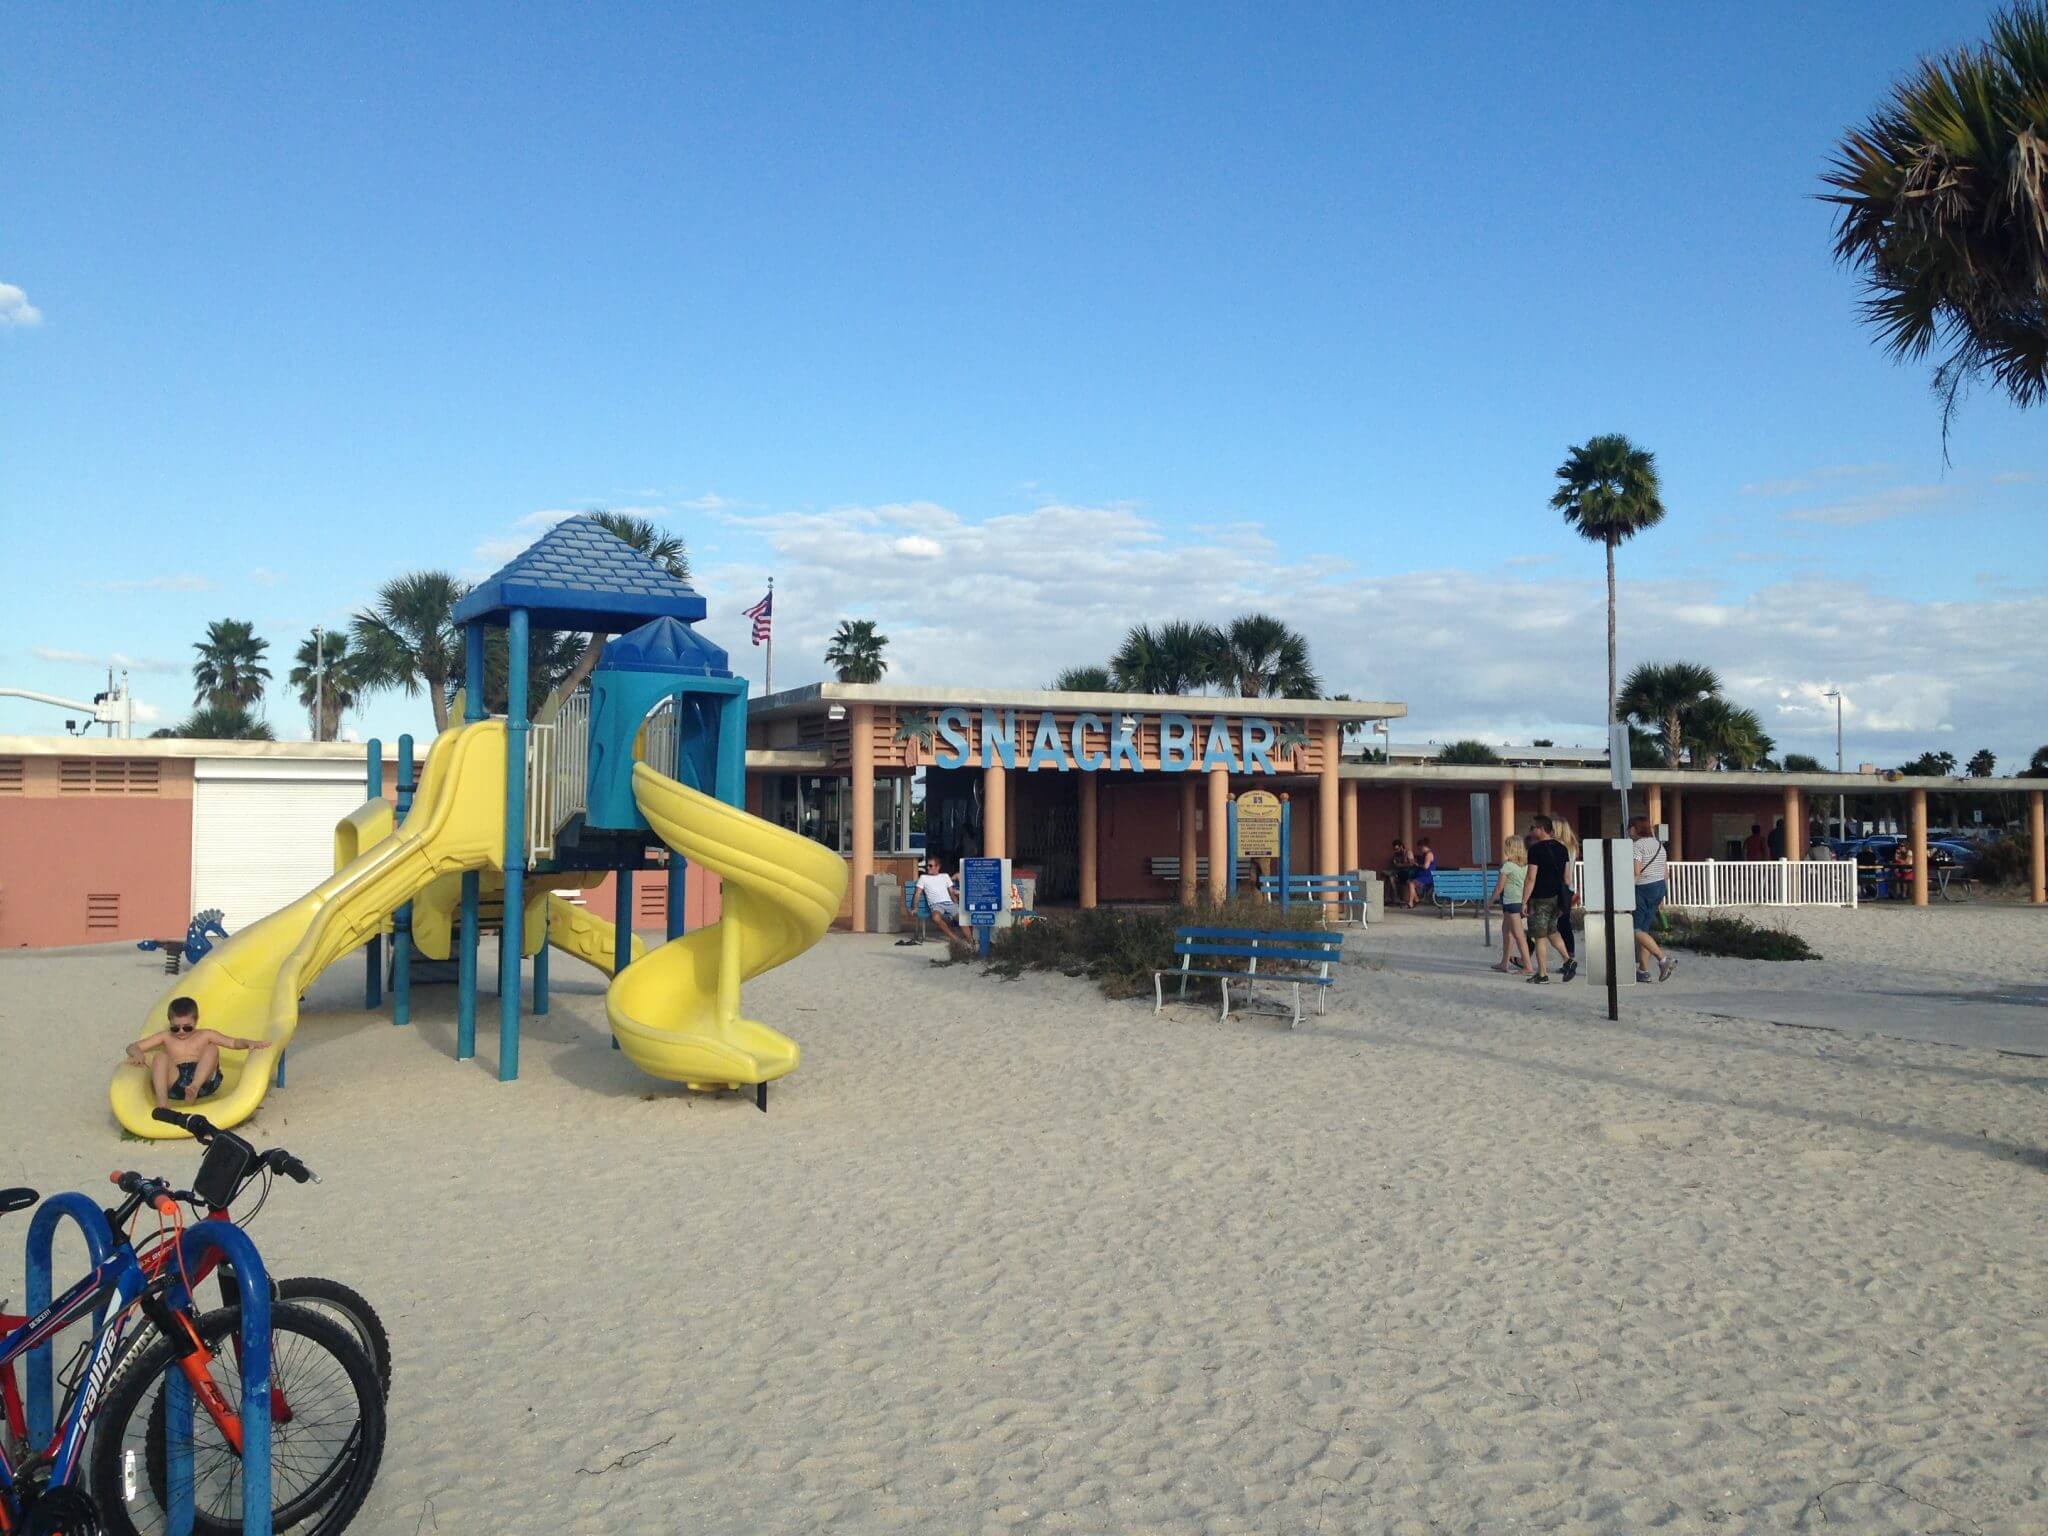 Playground at the beach in Treasure Island, Florida.